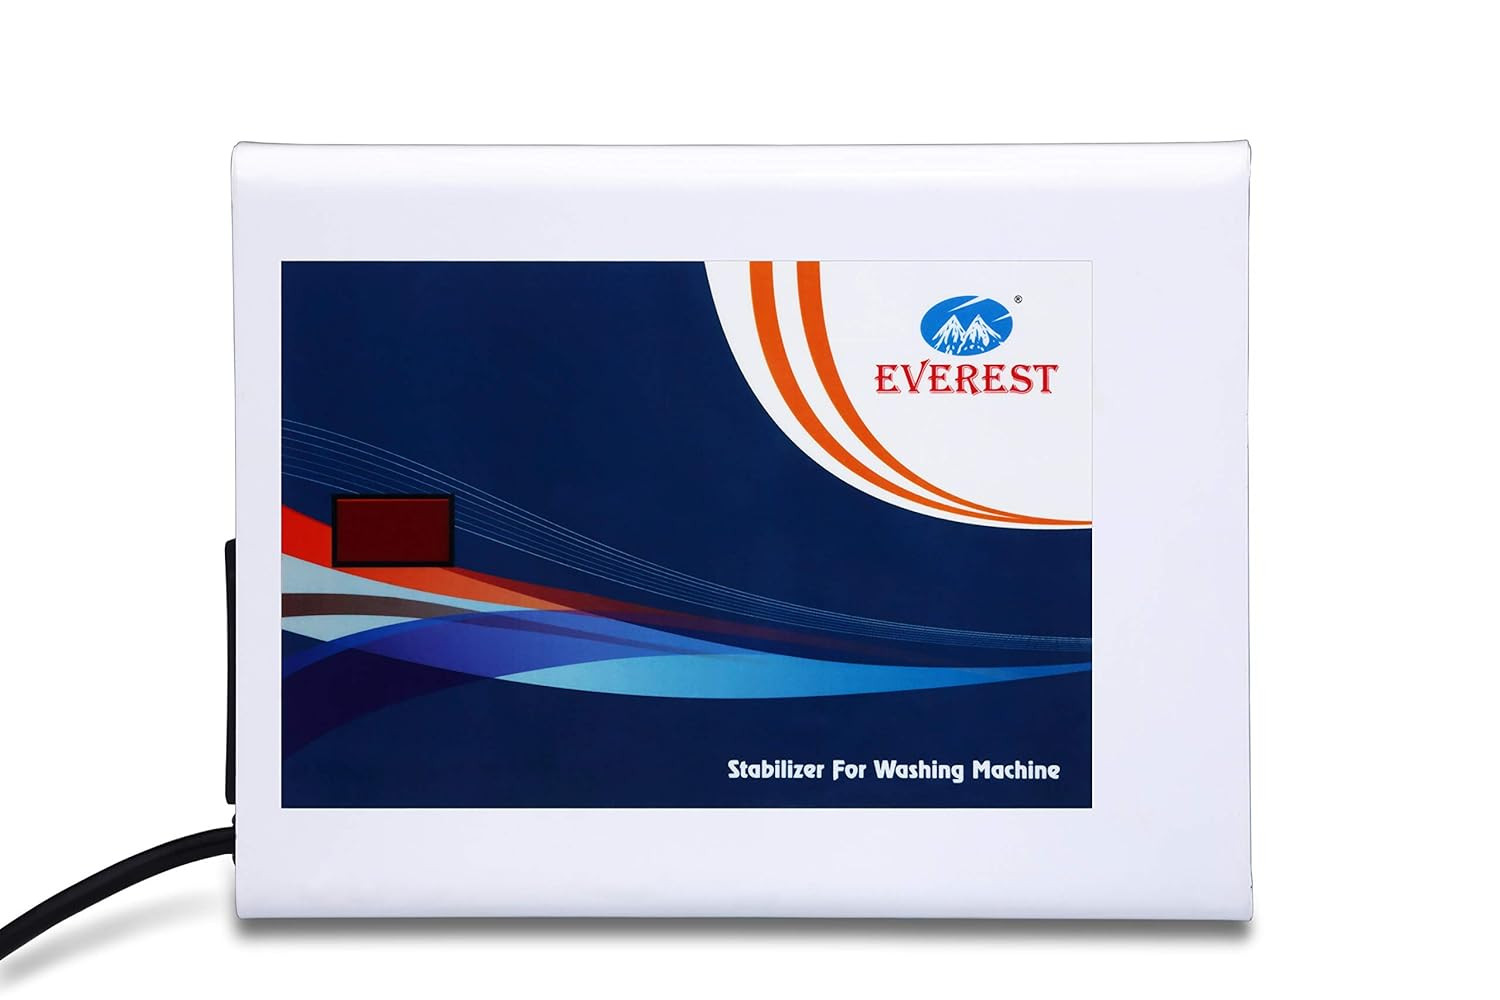 Everest EWD 300 WM Double Booster Voltage Stabilizer Attractive Digital Display Used for Washing Machine Upto 15 KG